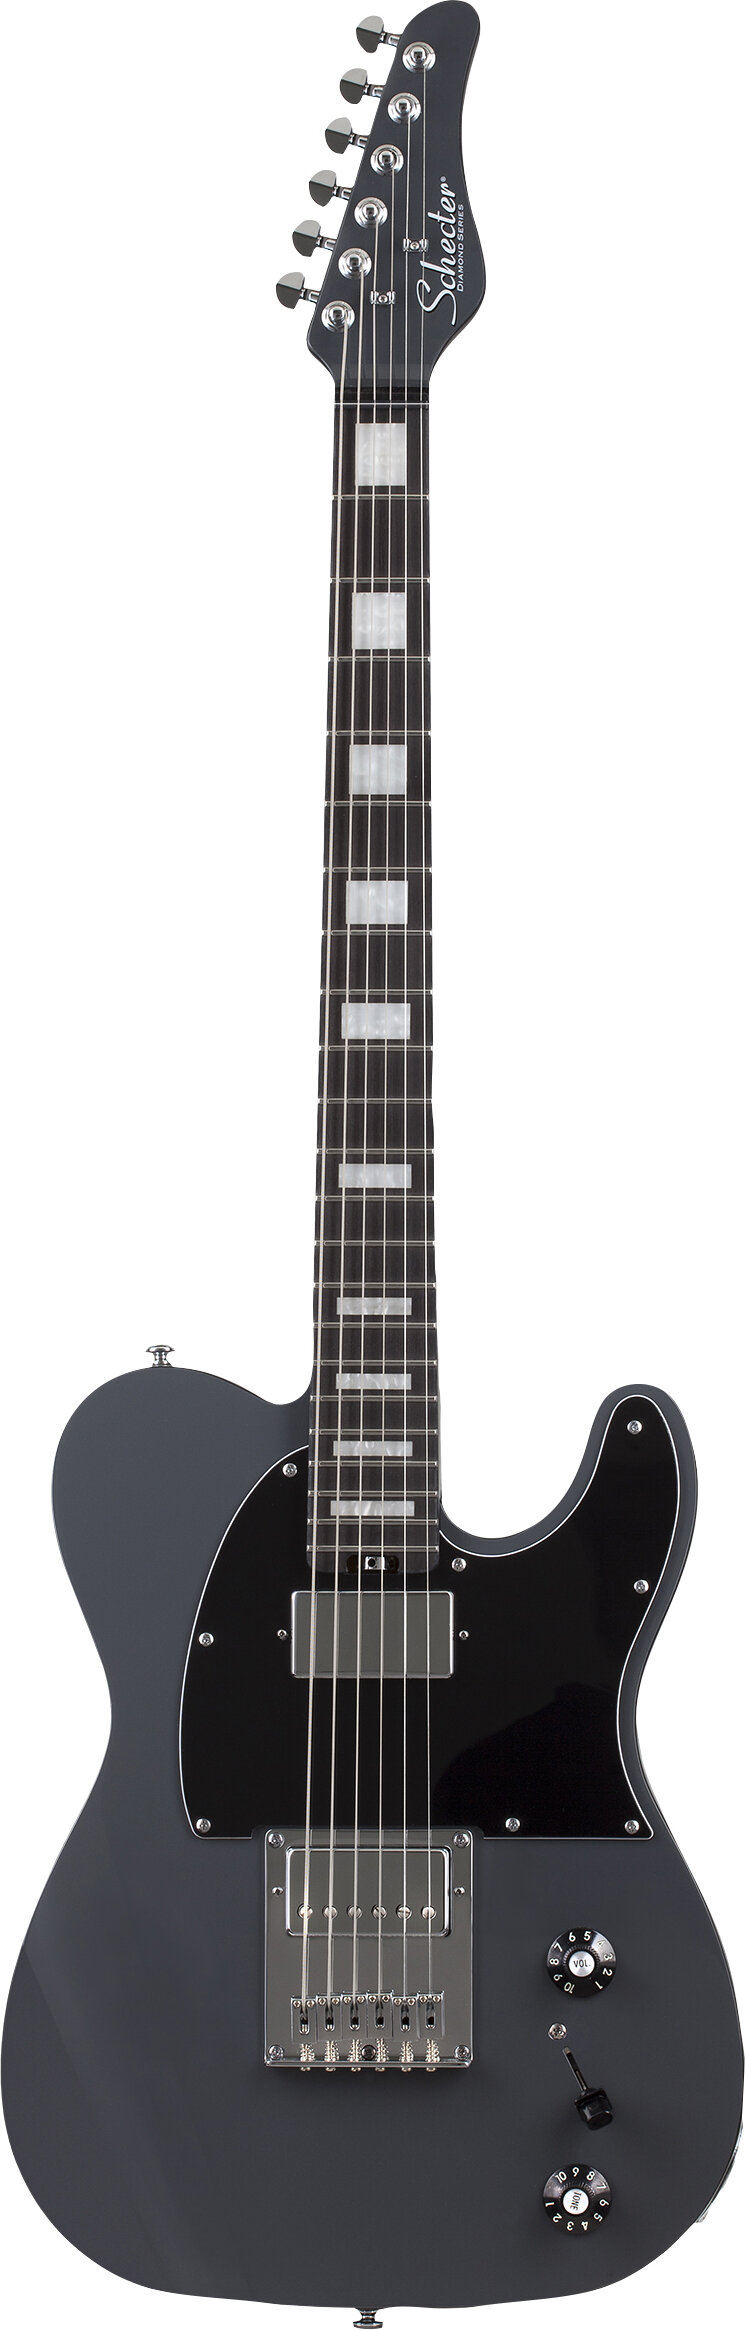 Schecter PT EX Extended Range Guitar Dorian Gray -  2148